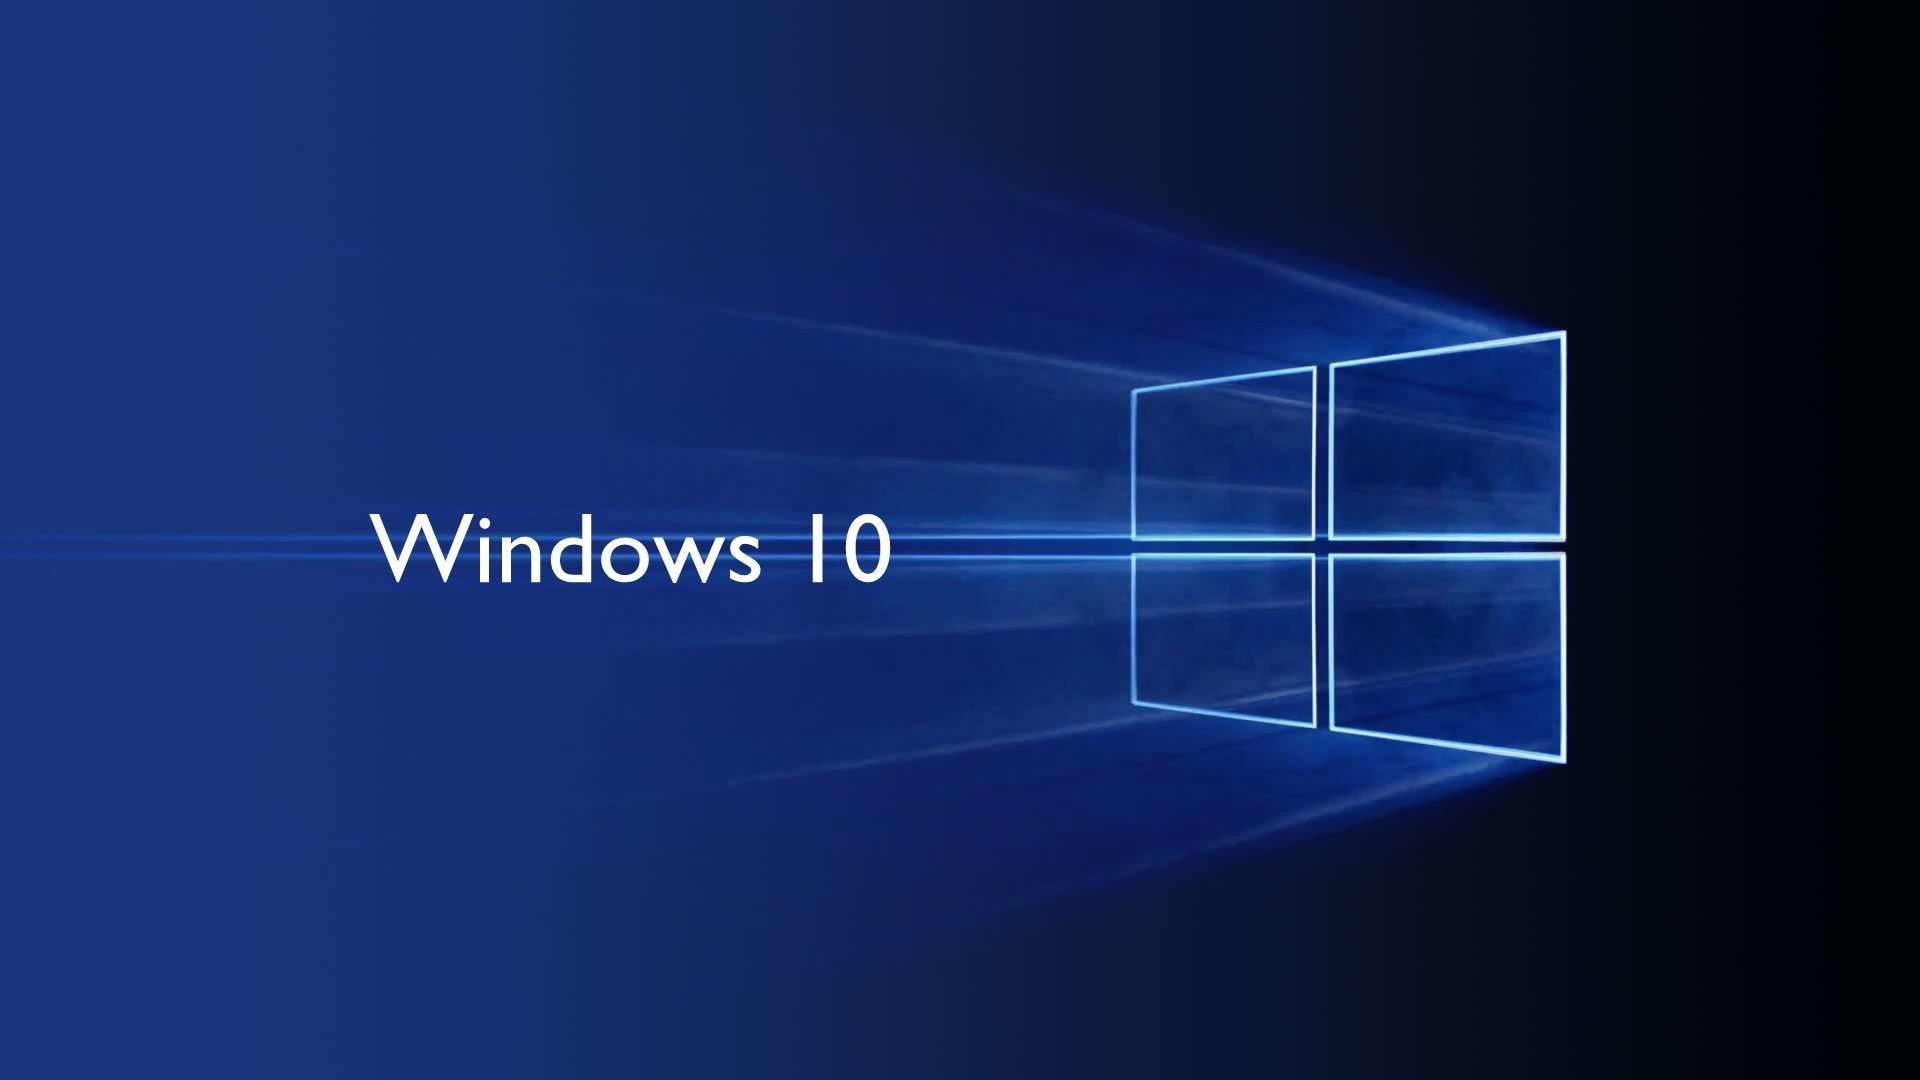 1920x1080 Wallpaper: Windows 10 Hd Desktop 1080p. Upload at August 1, 2015 by .